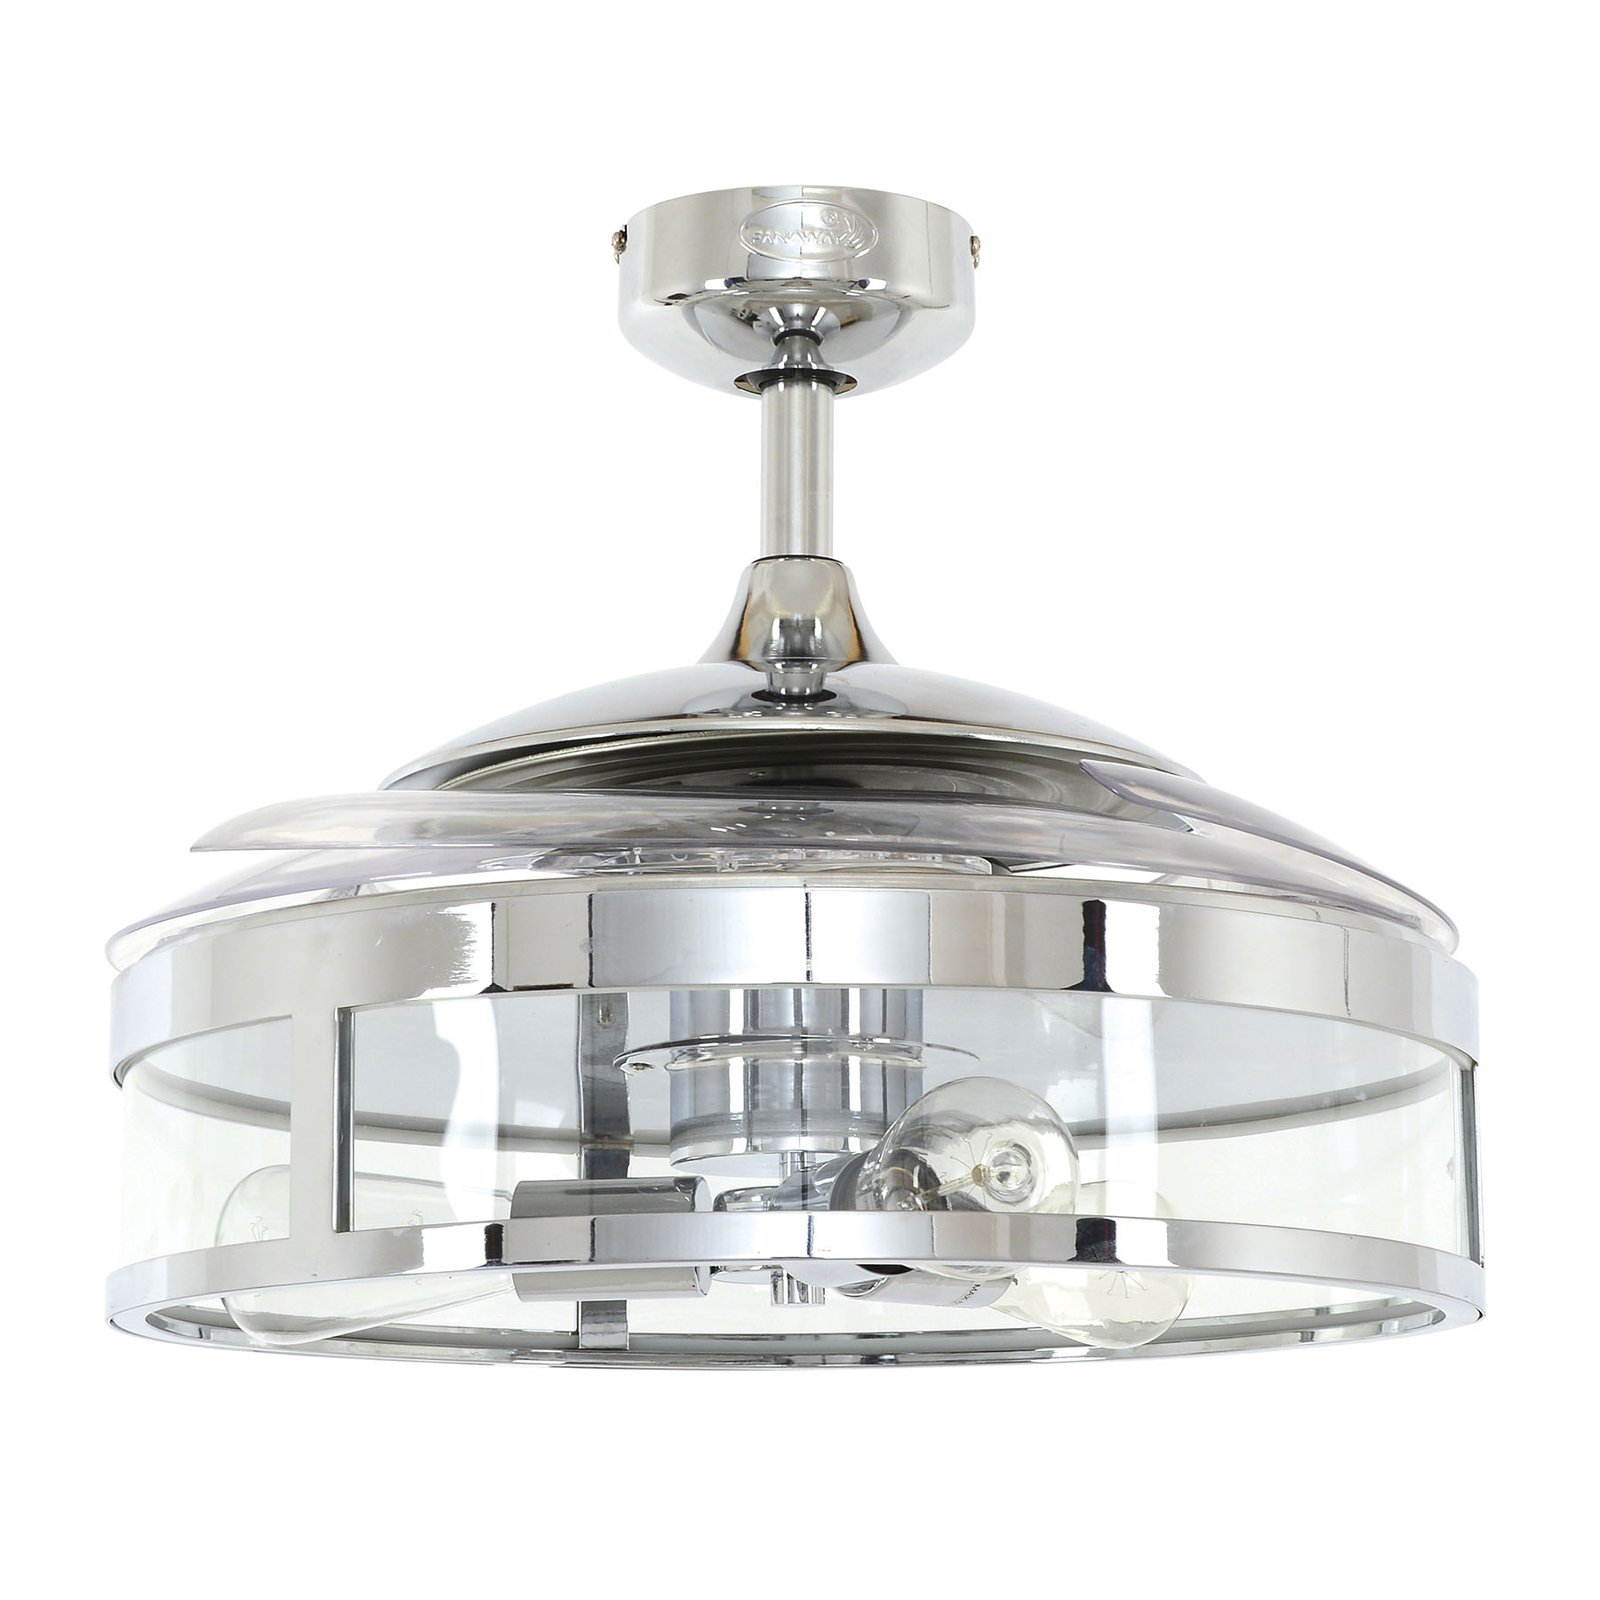 Beacon ceiling fan light Fanaway Classic chrome quiet